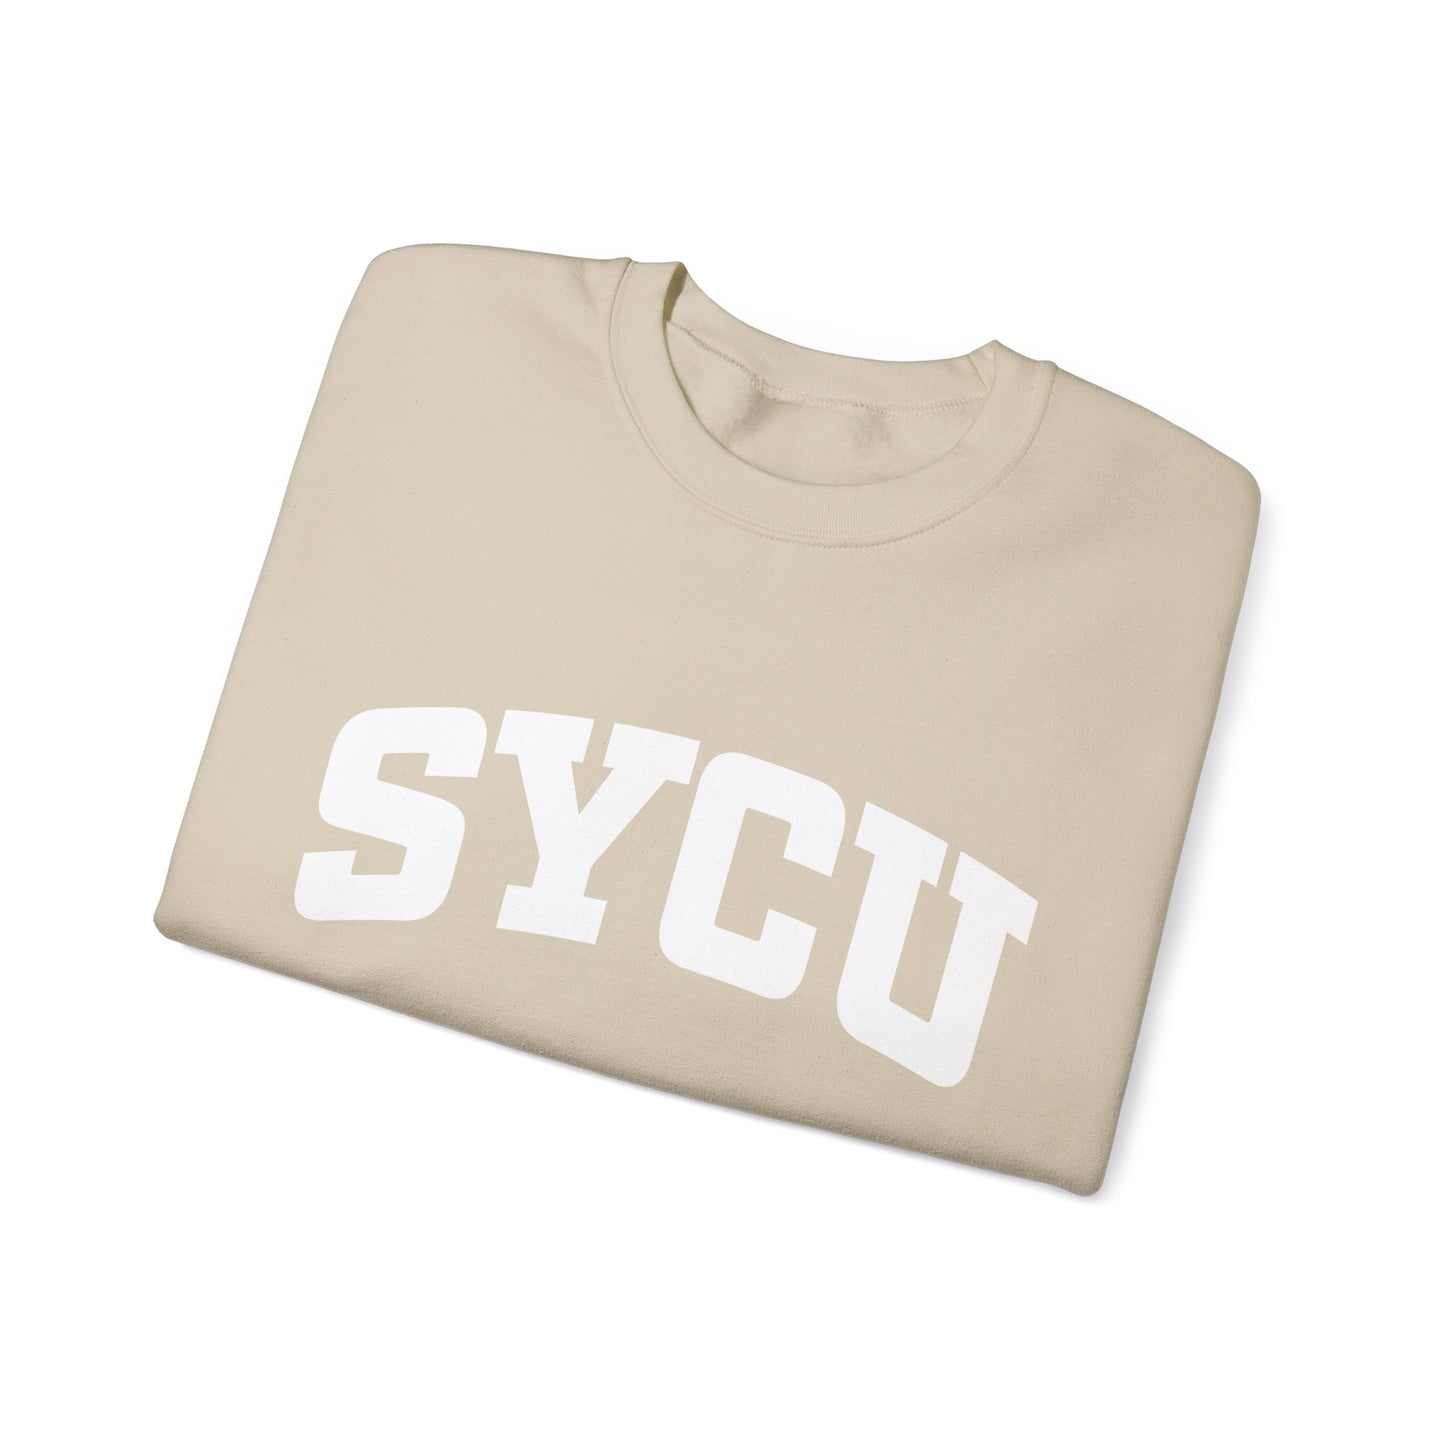 College | SYCU | Crewneck